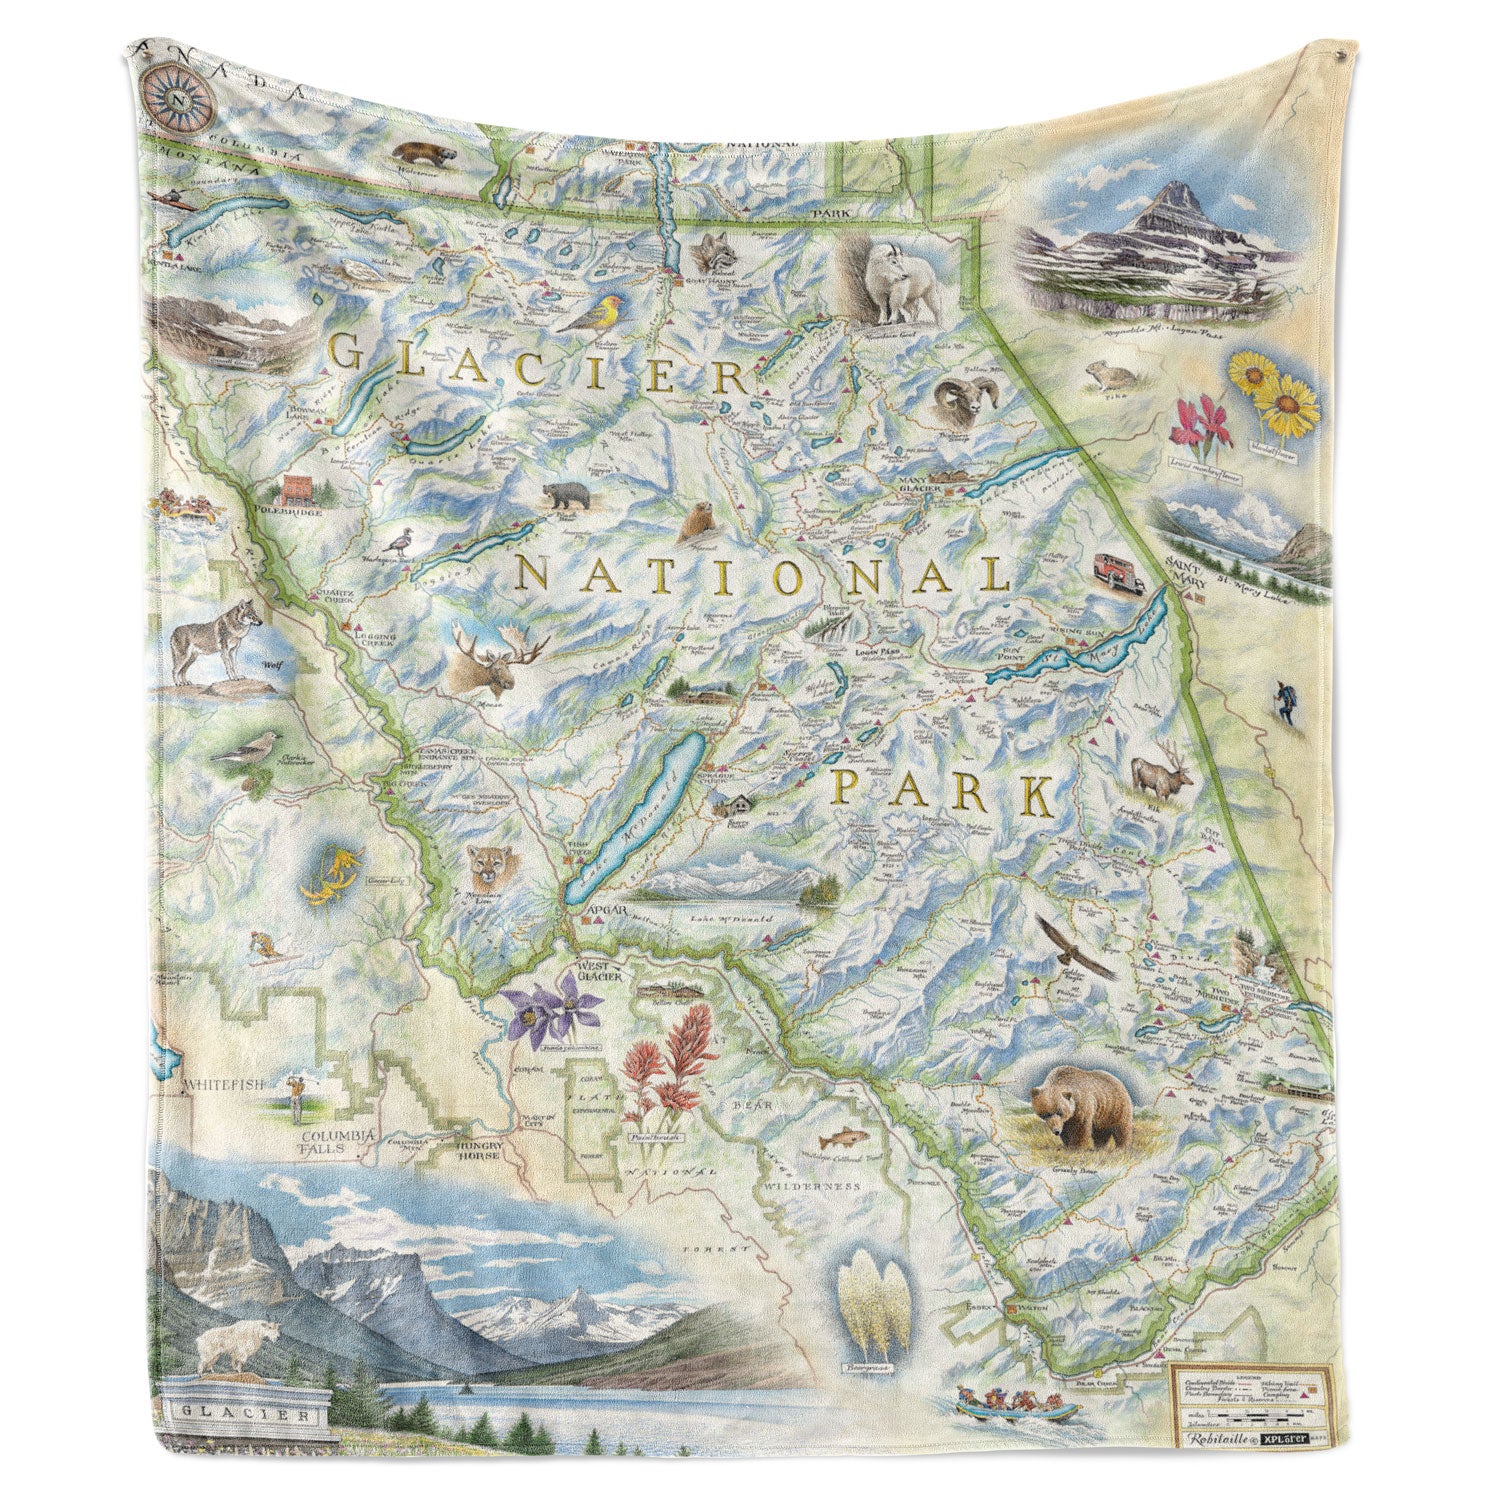 Hanging blanket with a map of Glacier National Park on it. Hand-drawn artwork. Blanket measures 58